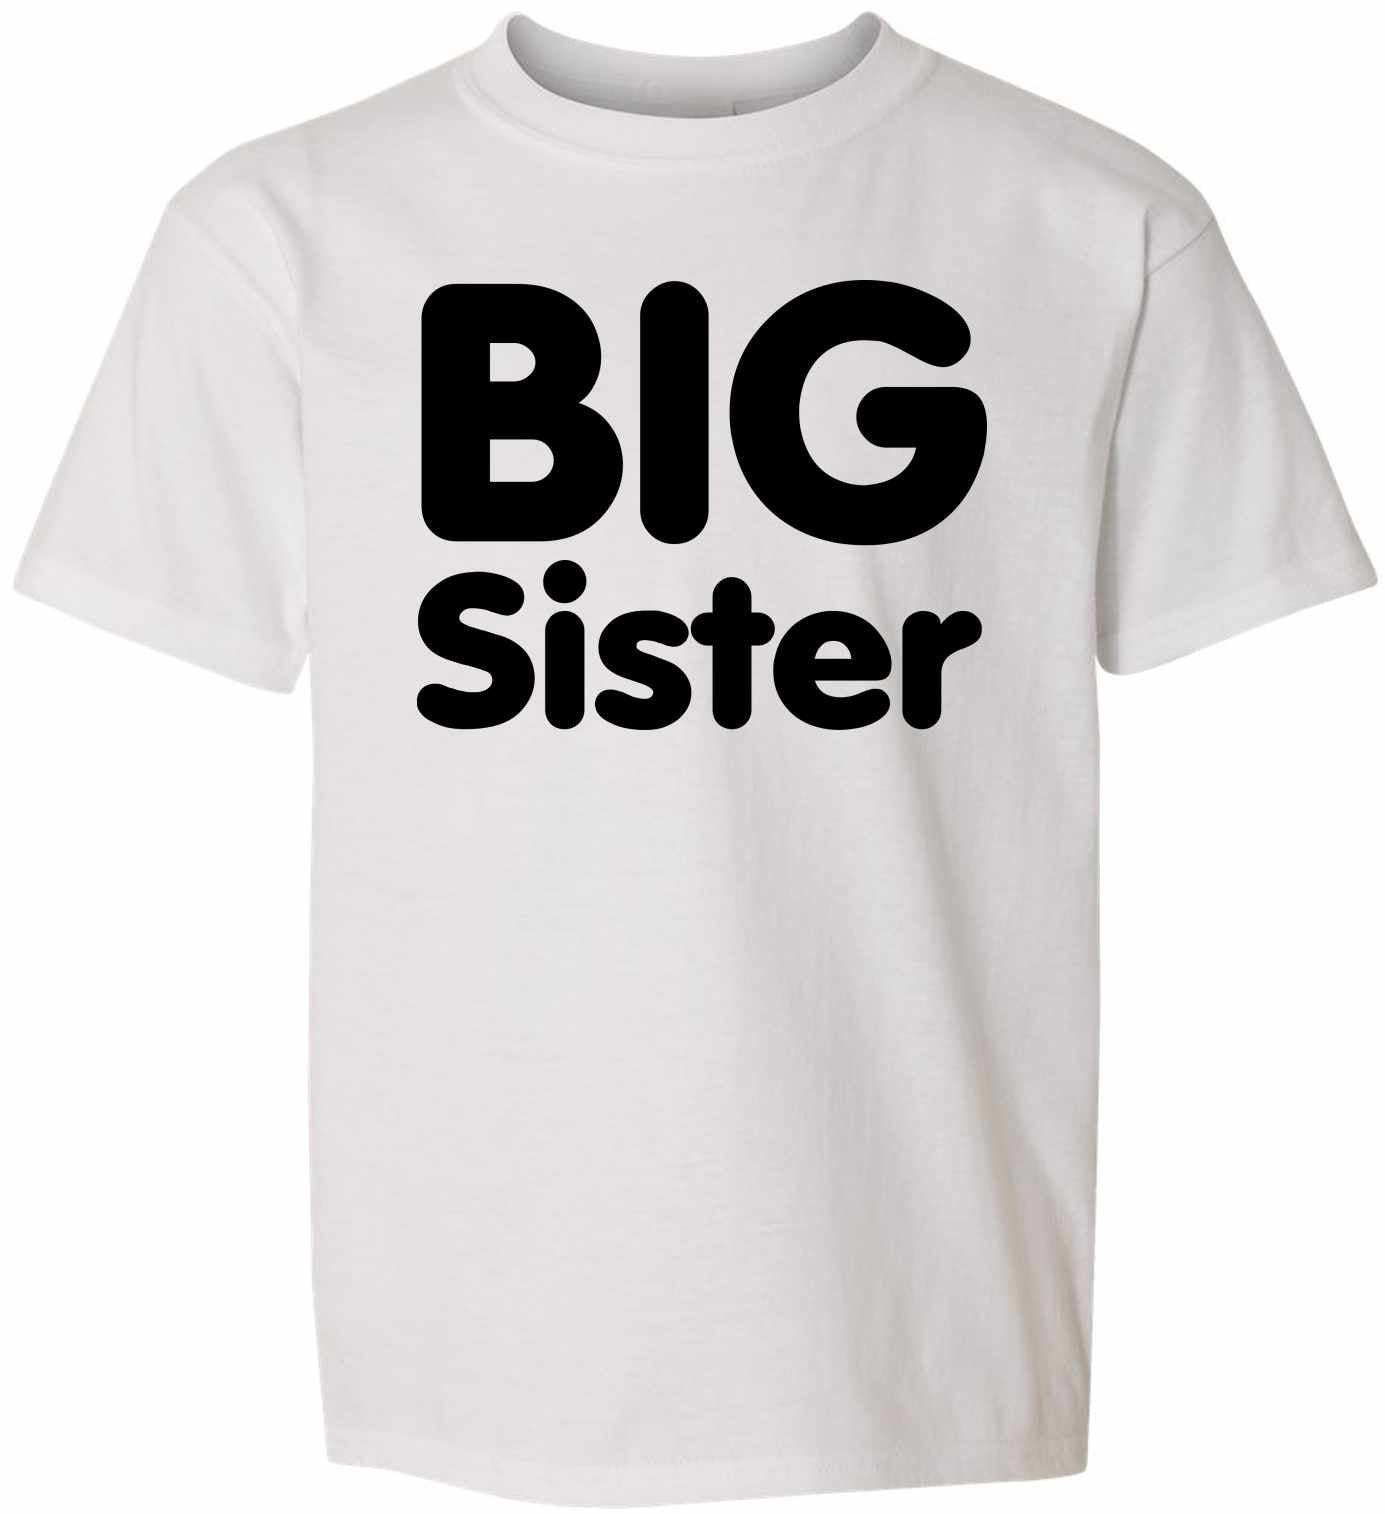 BIG SISTER on Youth T-Shirt (#853-201)